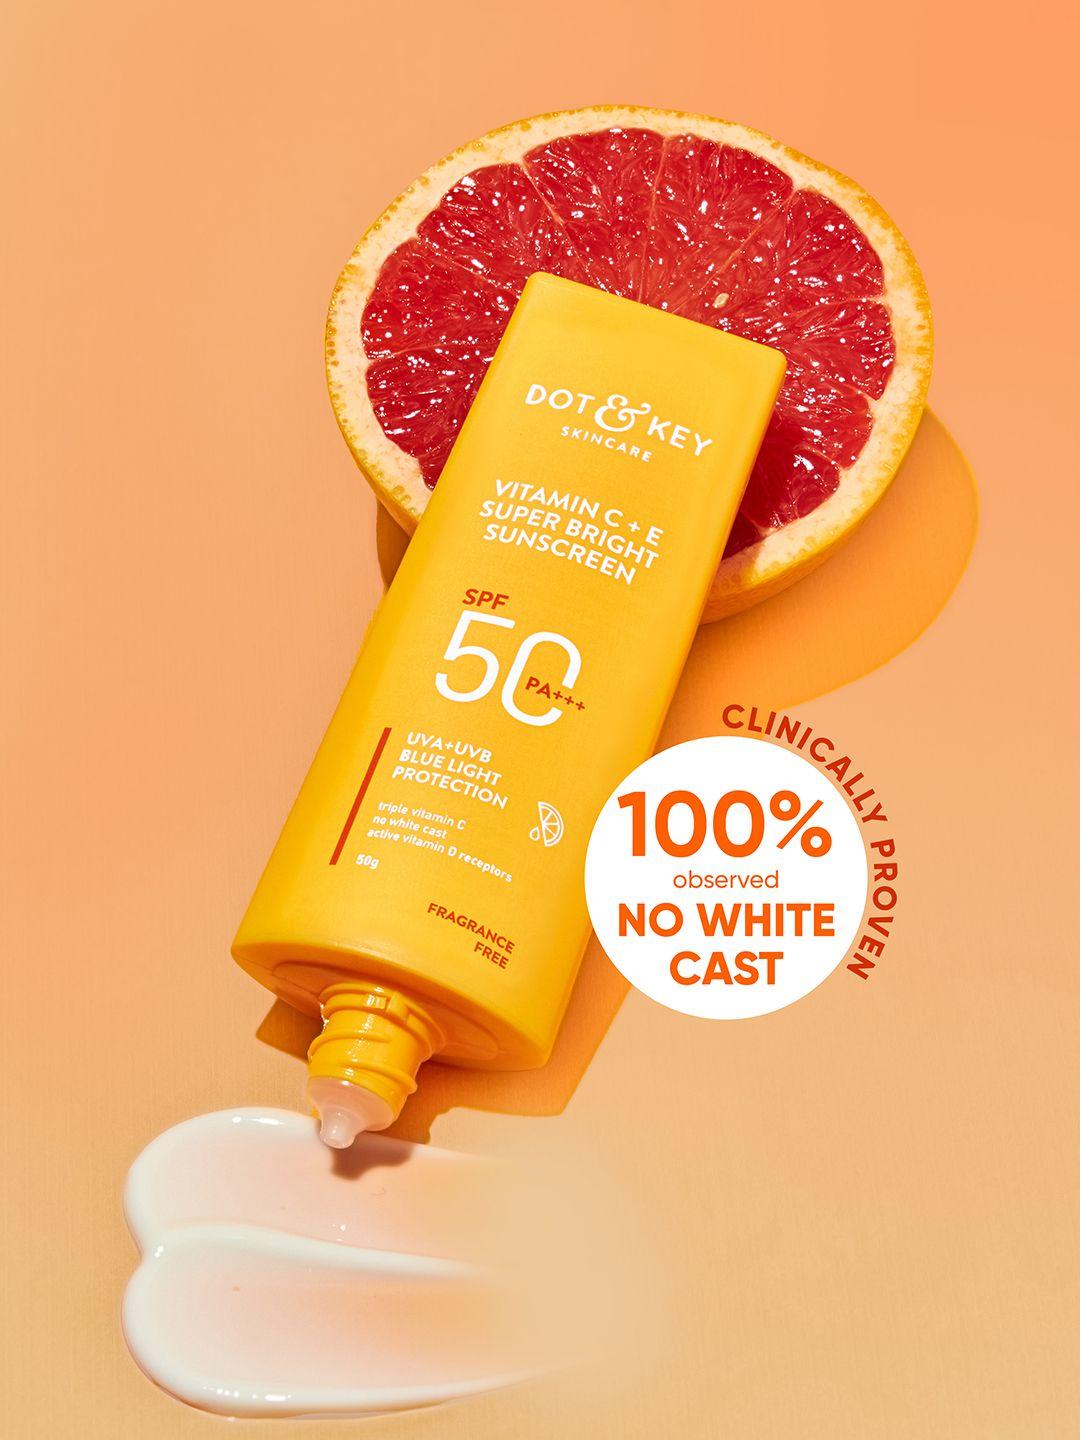 DOT & KEY Vitamin C + E Sunscreen SPF 50 PA+++ For Glowing Skin, 100% No White Cast - 50g